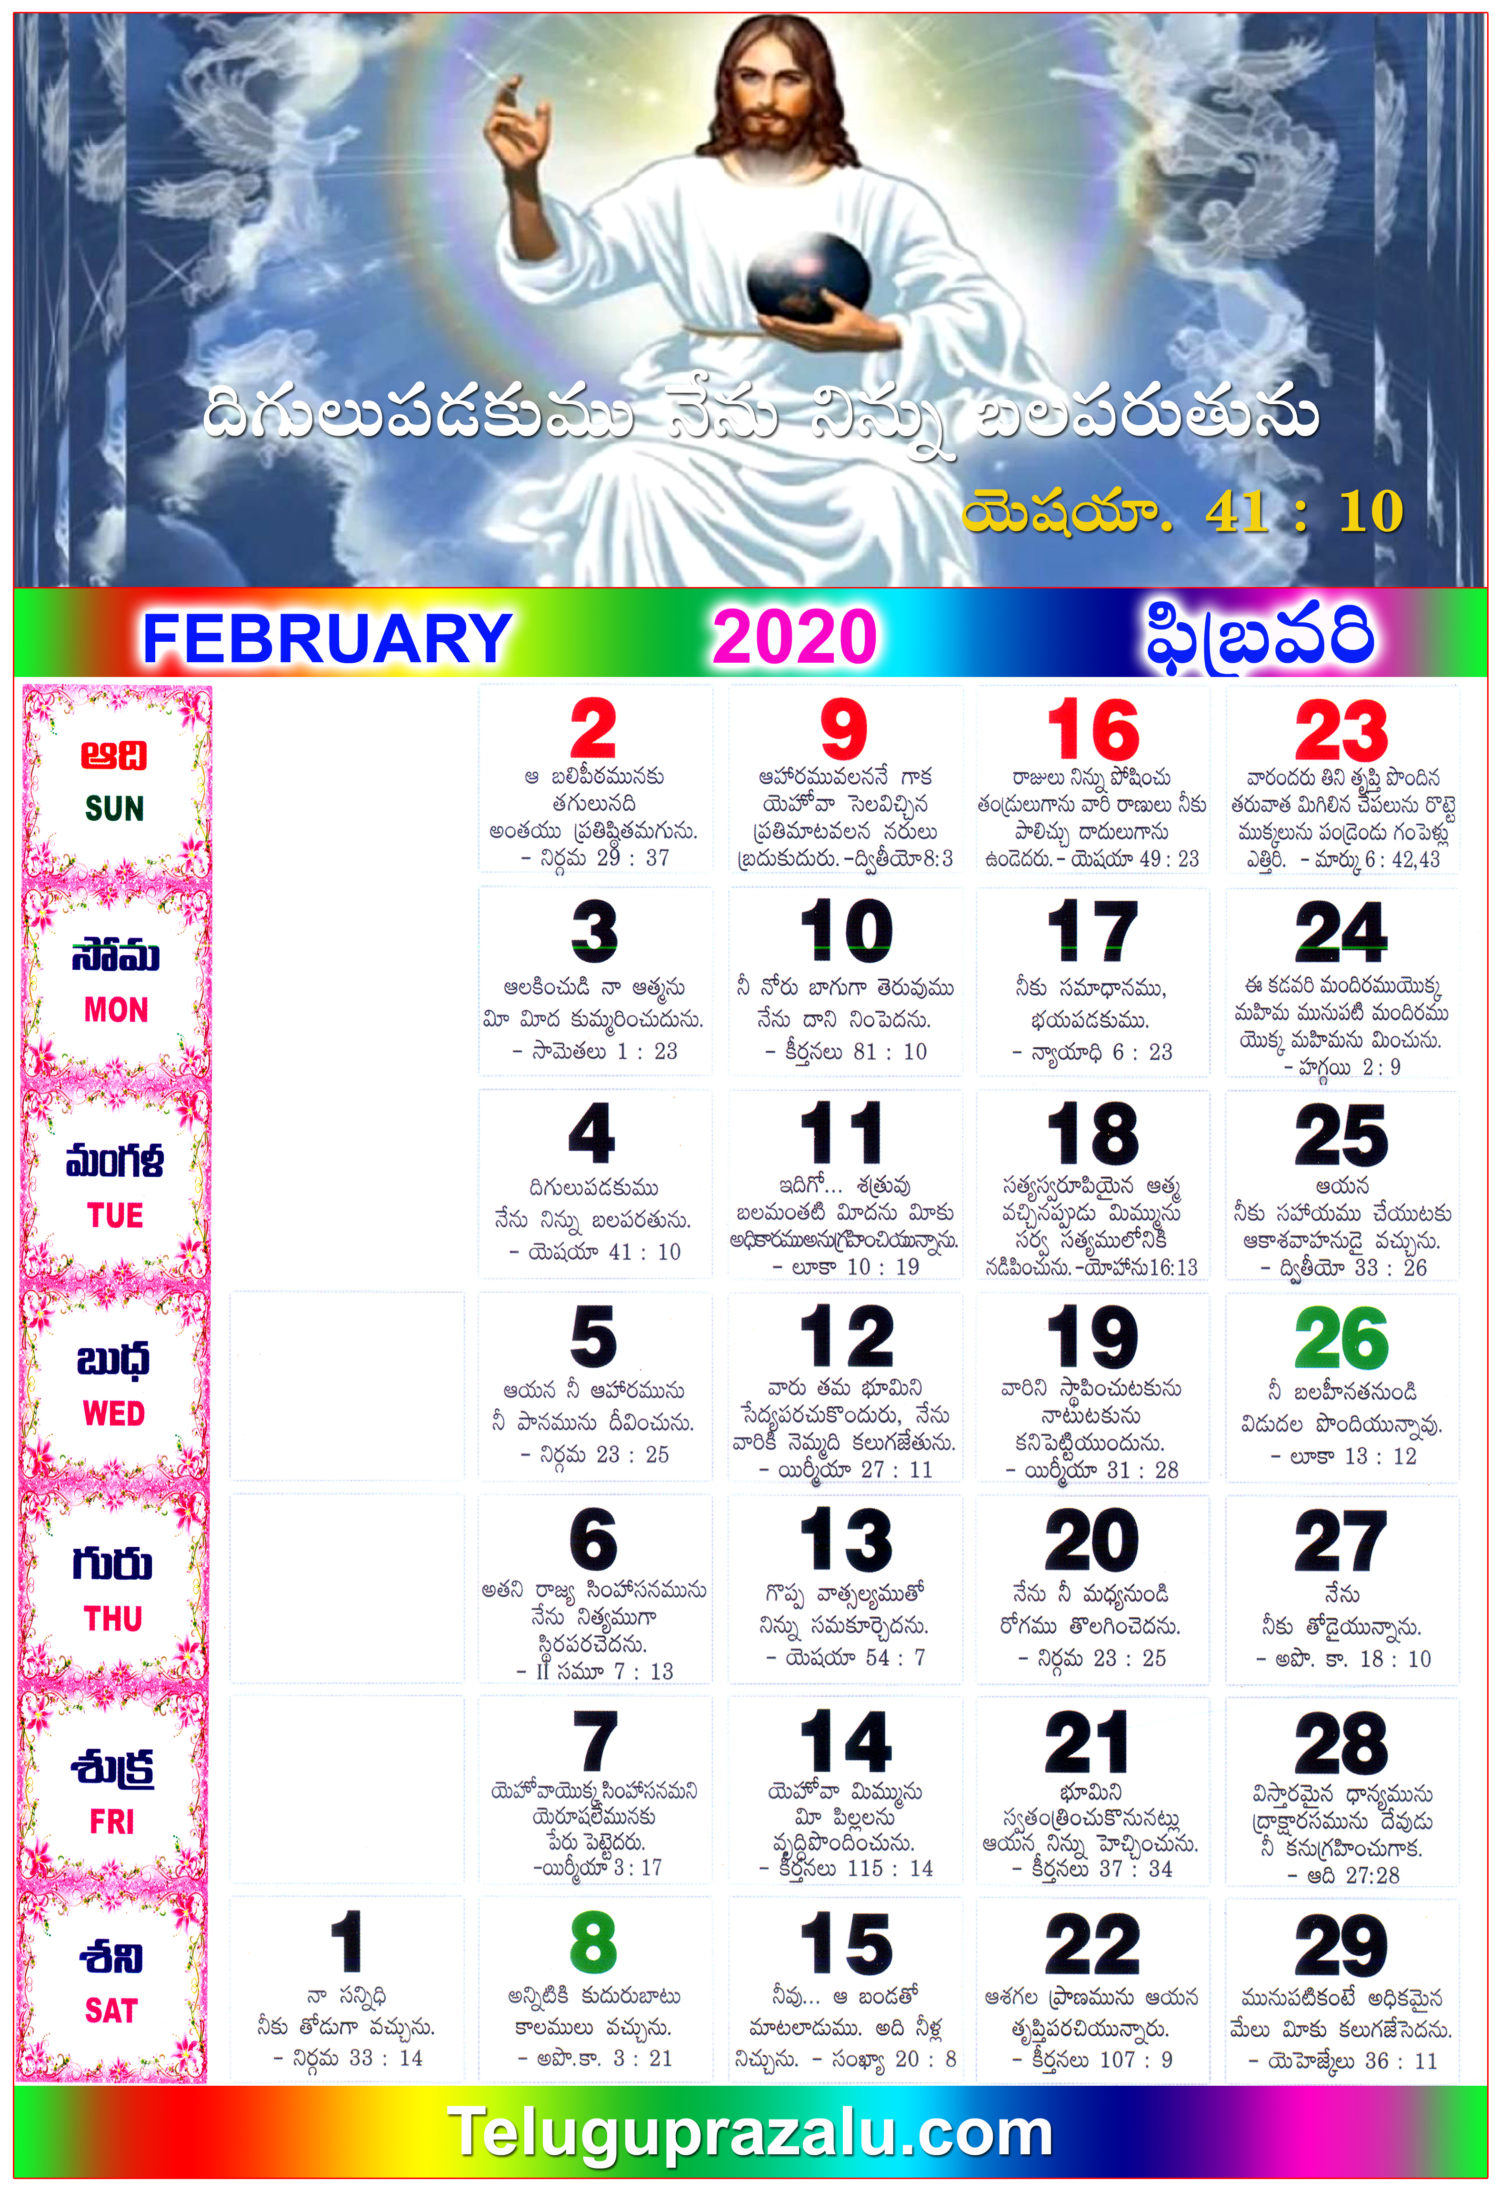 Telugu Christian Calendar 2020 February Telugu News, Movies and More